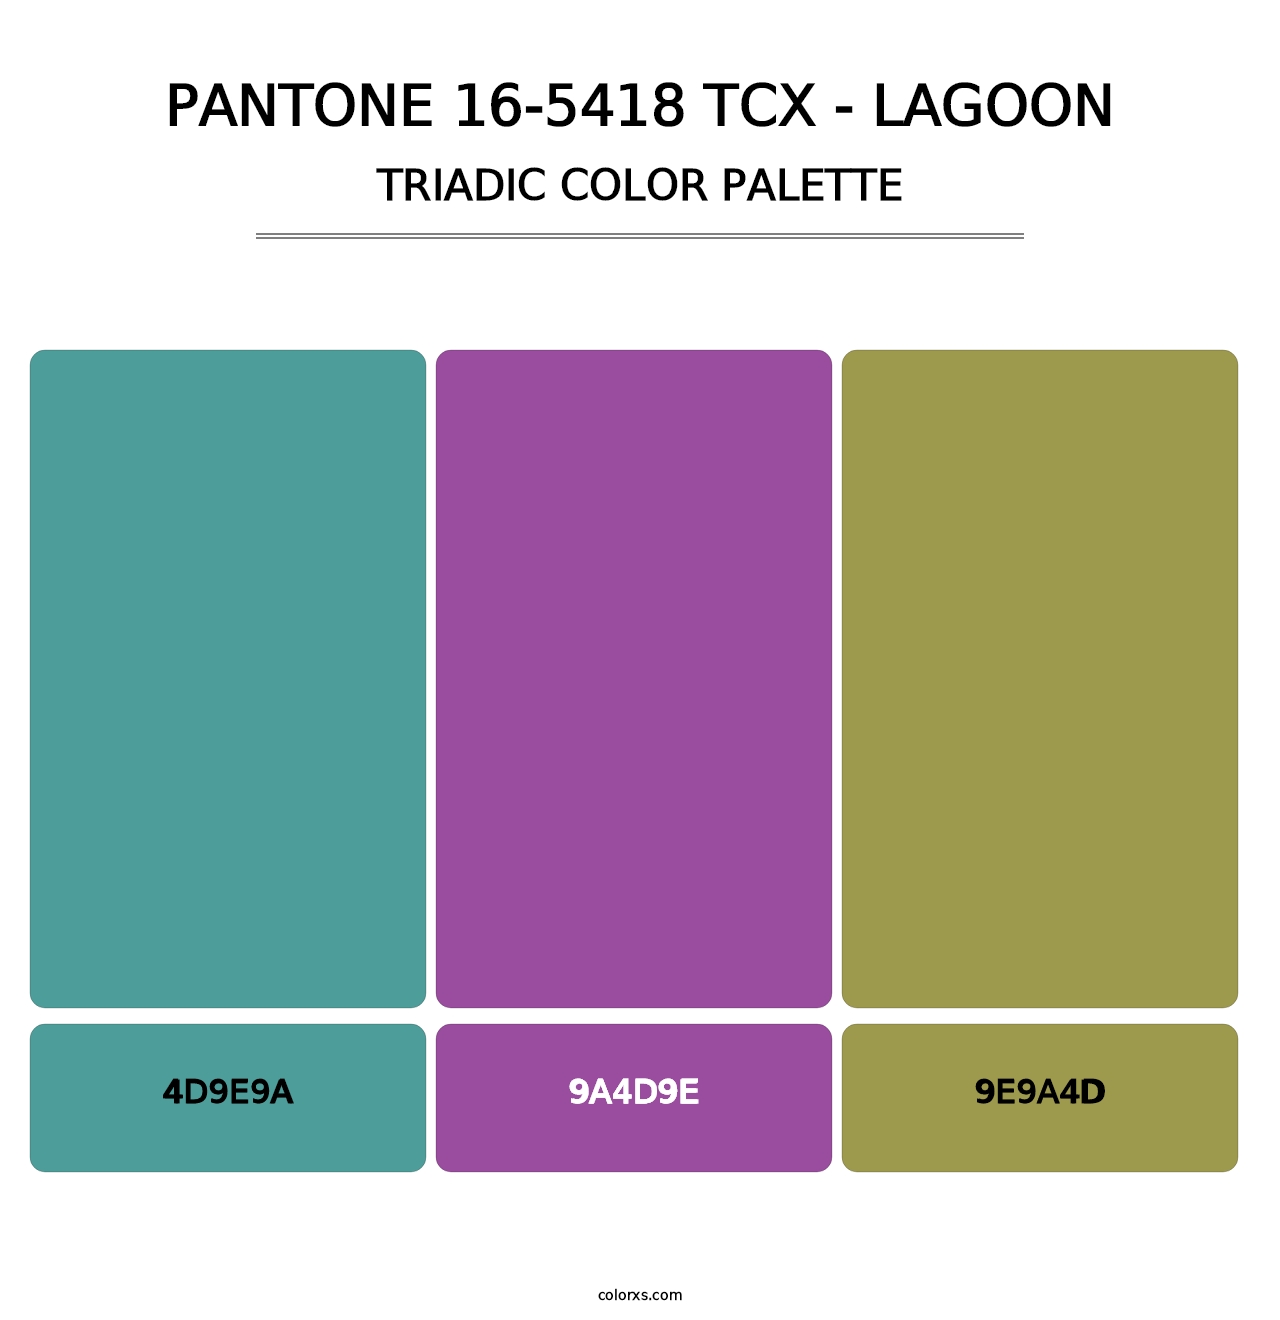 PANTONE 16-5418 TCX - Lagoon - Triadic Color Palette